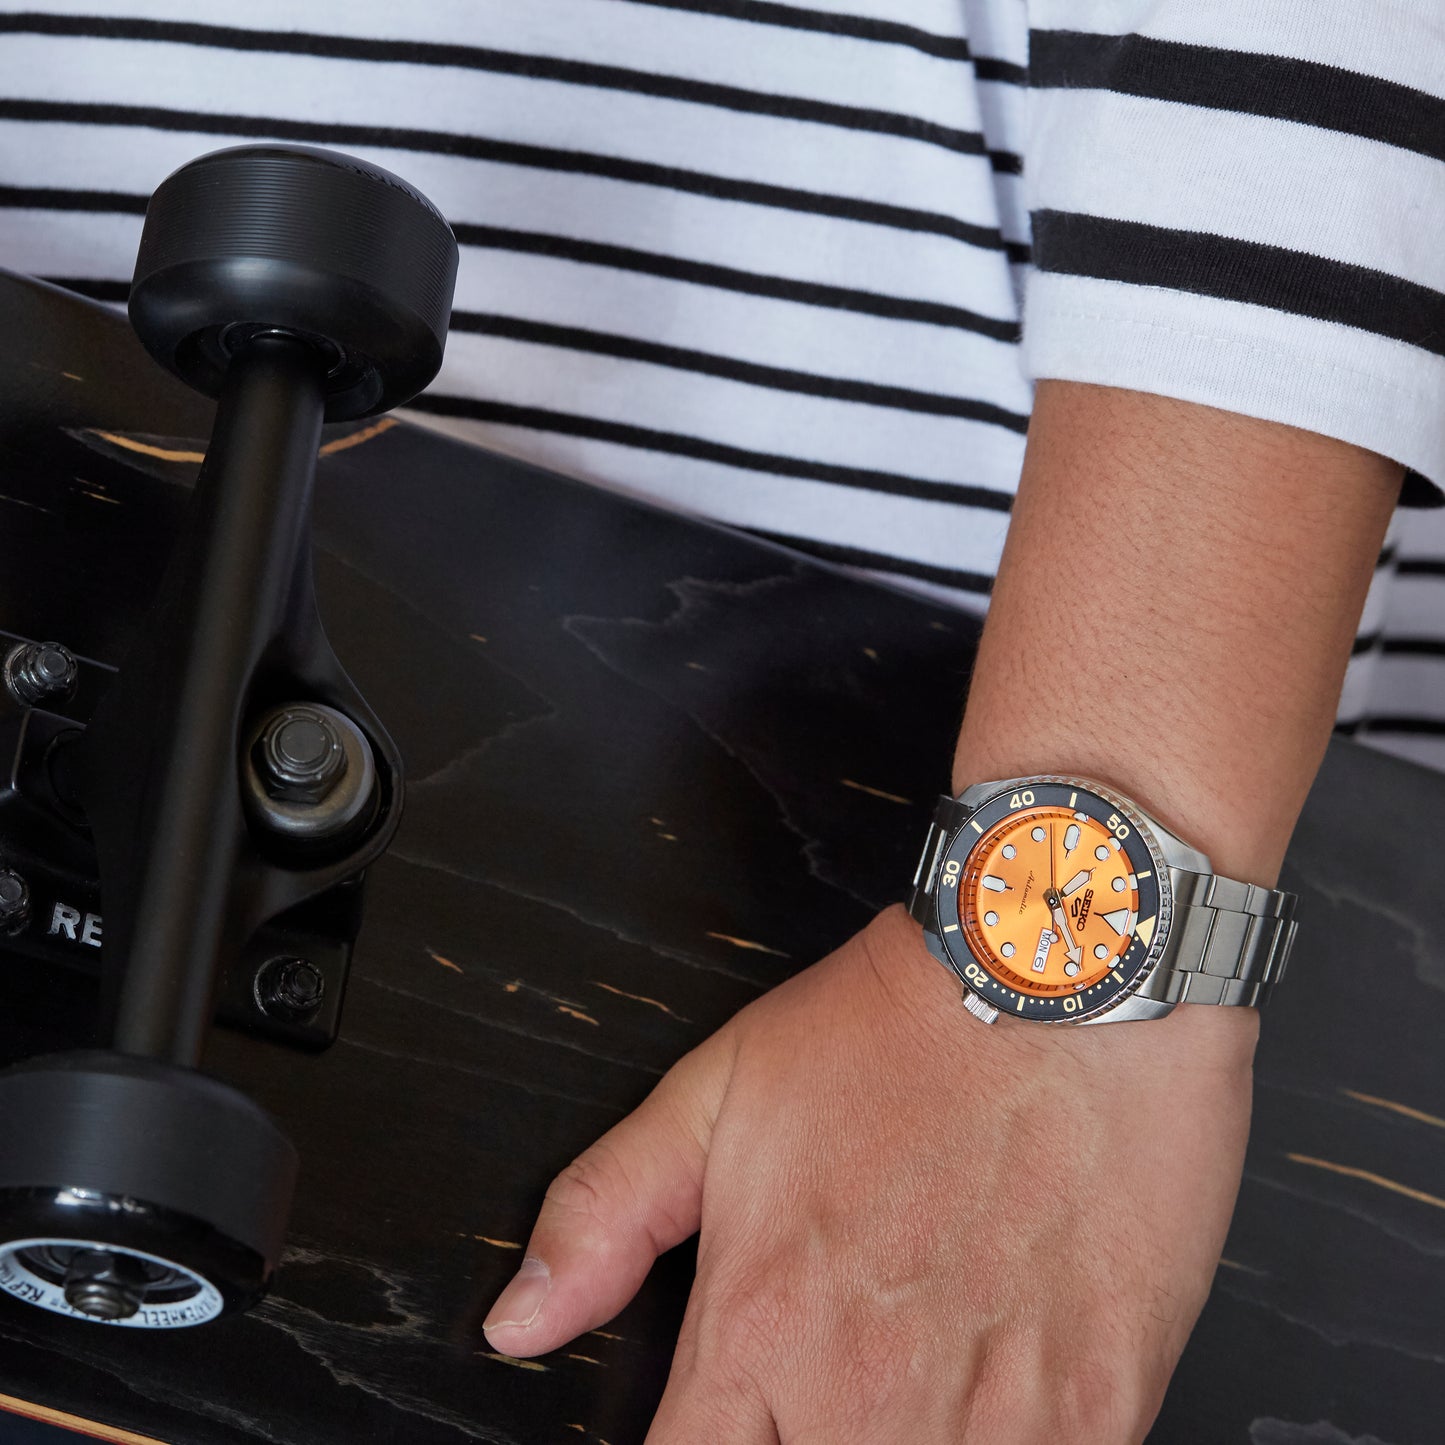 Seiko 5 Sports Orange Automatic Bracelet Watch SRPD59K1